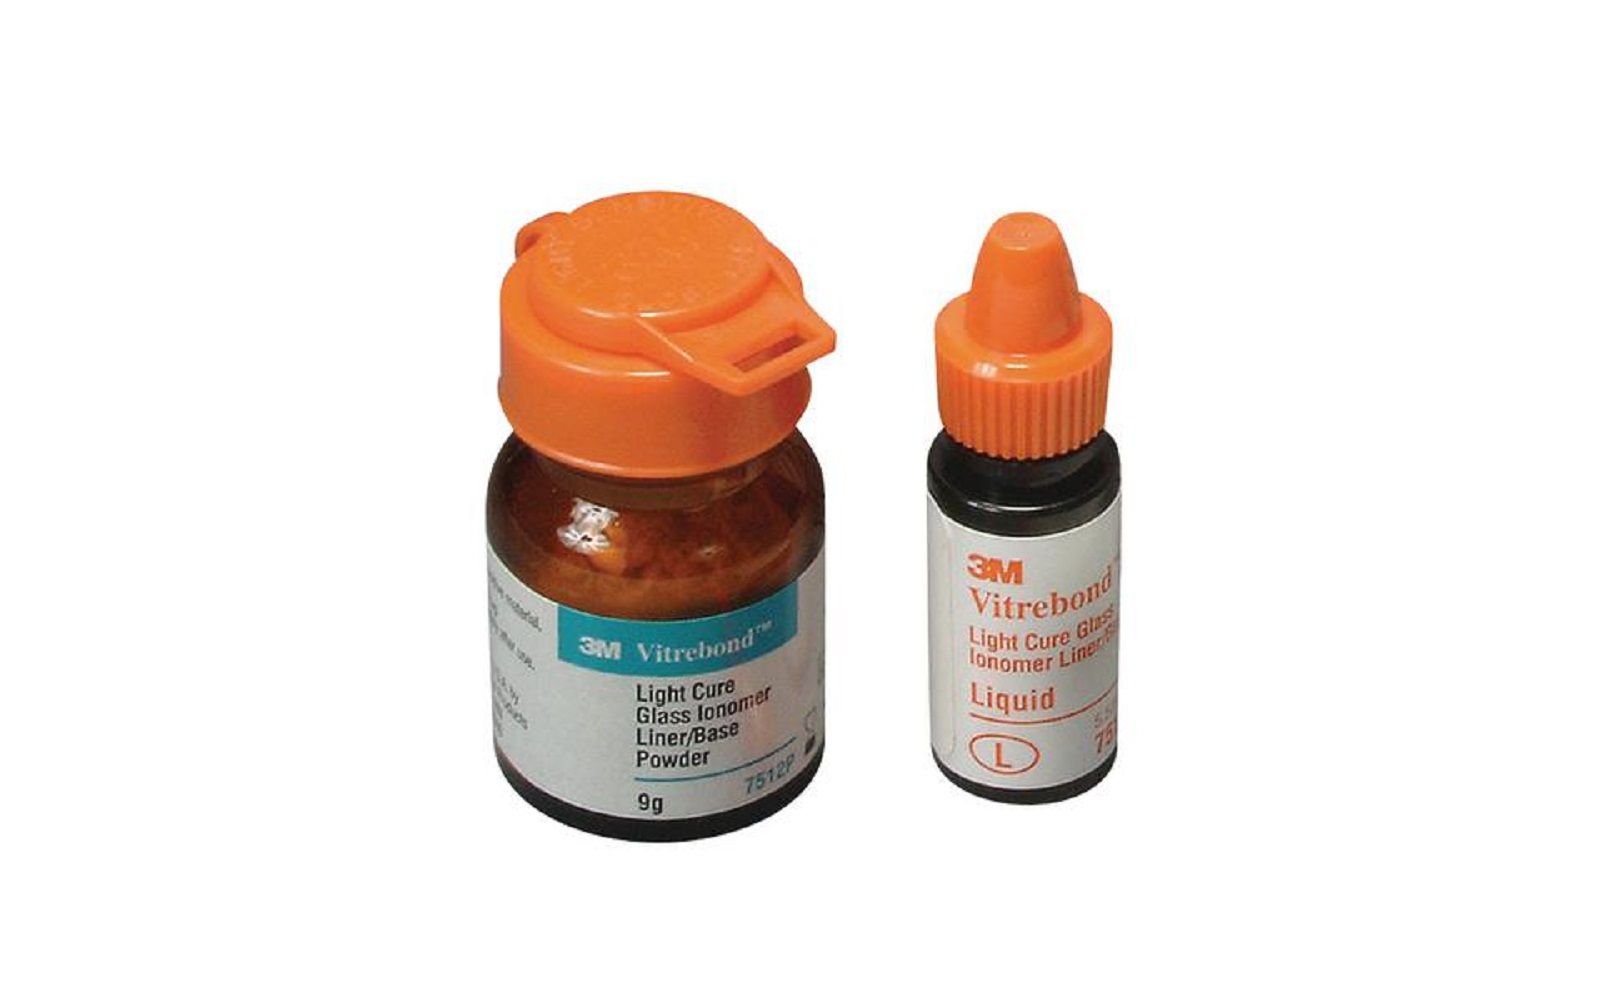 Vitrebond™ light cure glass ionomer liner/base introductory kit